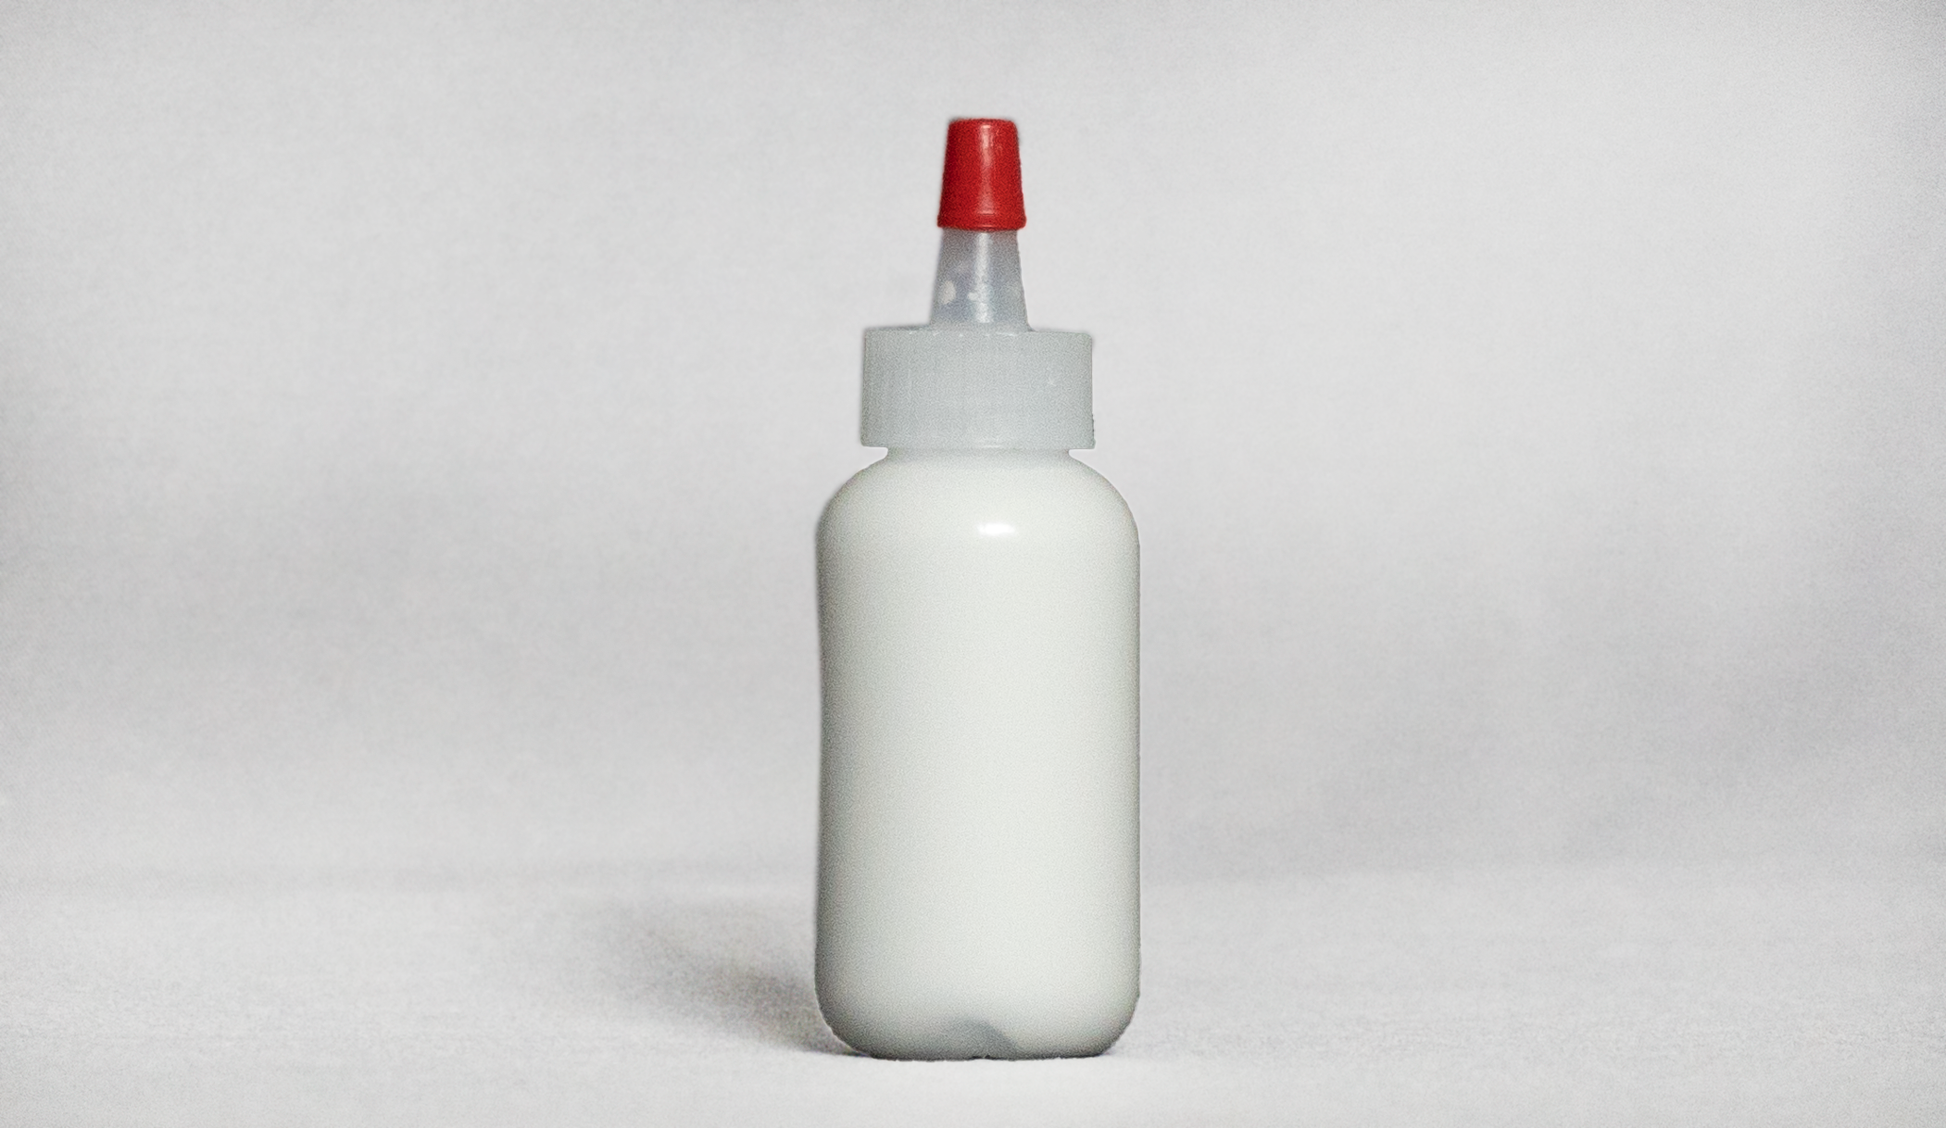 Jigitz Quilling Glue Bottle Set 15-Pack - 1oz Precision Tip Applicator  Bottles with Mini Funnels for Paint, Glue, Ink